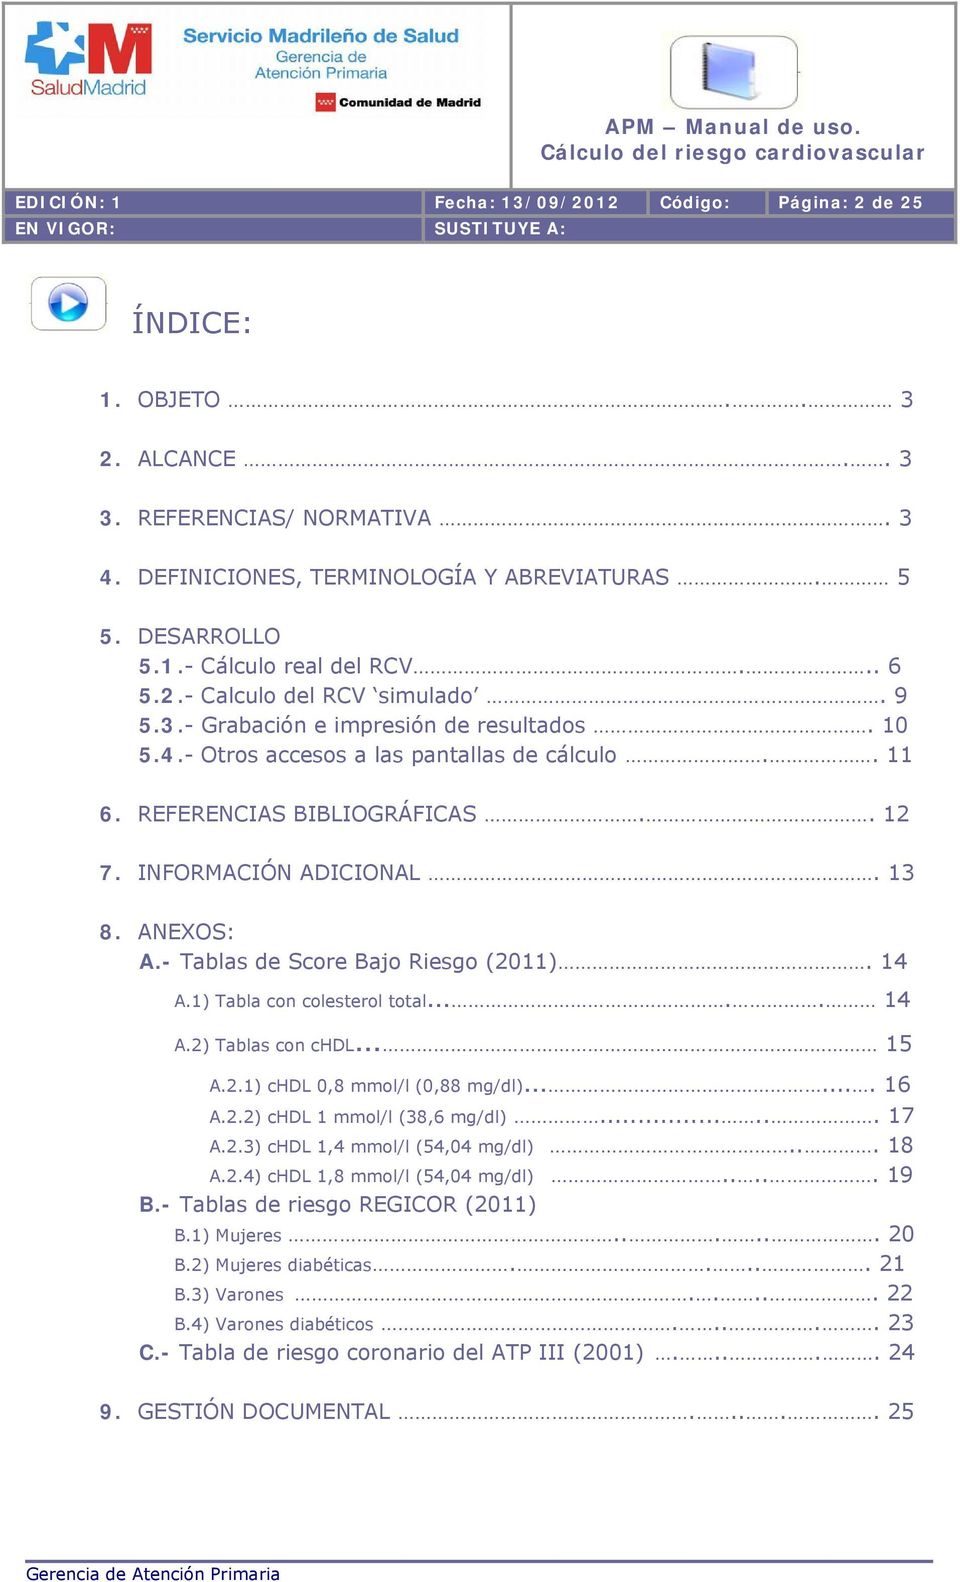 13 8. ANEXOS: A.- Tablas de Score Bajo Riesgo (2011). 14 A.1) Tabla con colesterol total.. 14 A.2) Tablas con chdl 15 A.2.1) chdl 0,8 mmol/l (0,88 mg/dl).... 16 A.2.2) chdl 1 mmol/l (38,6 mg/dl).